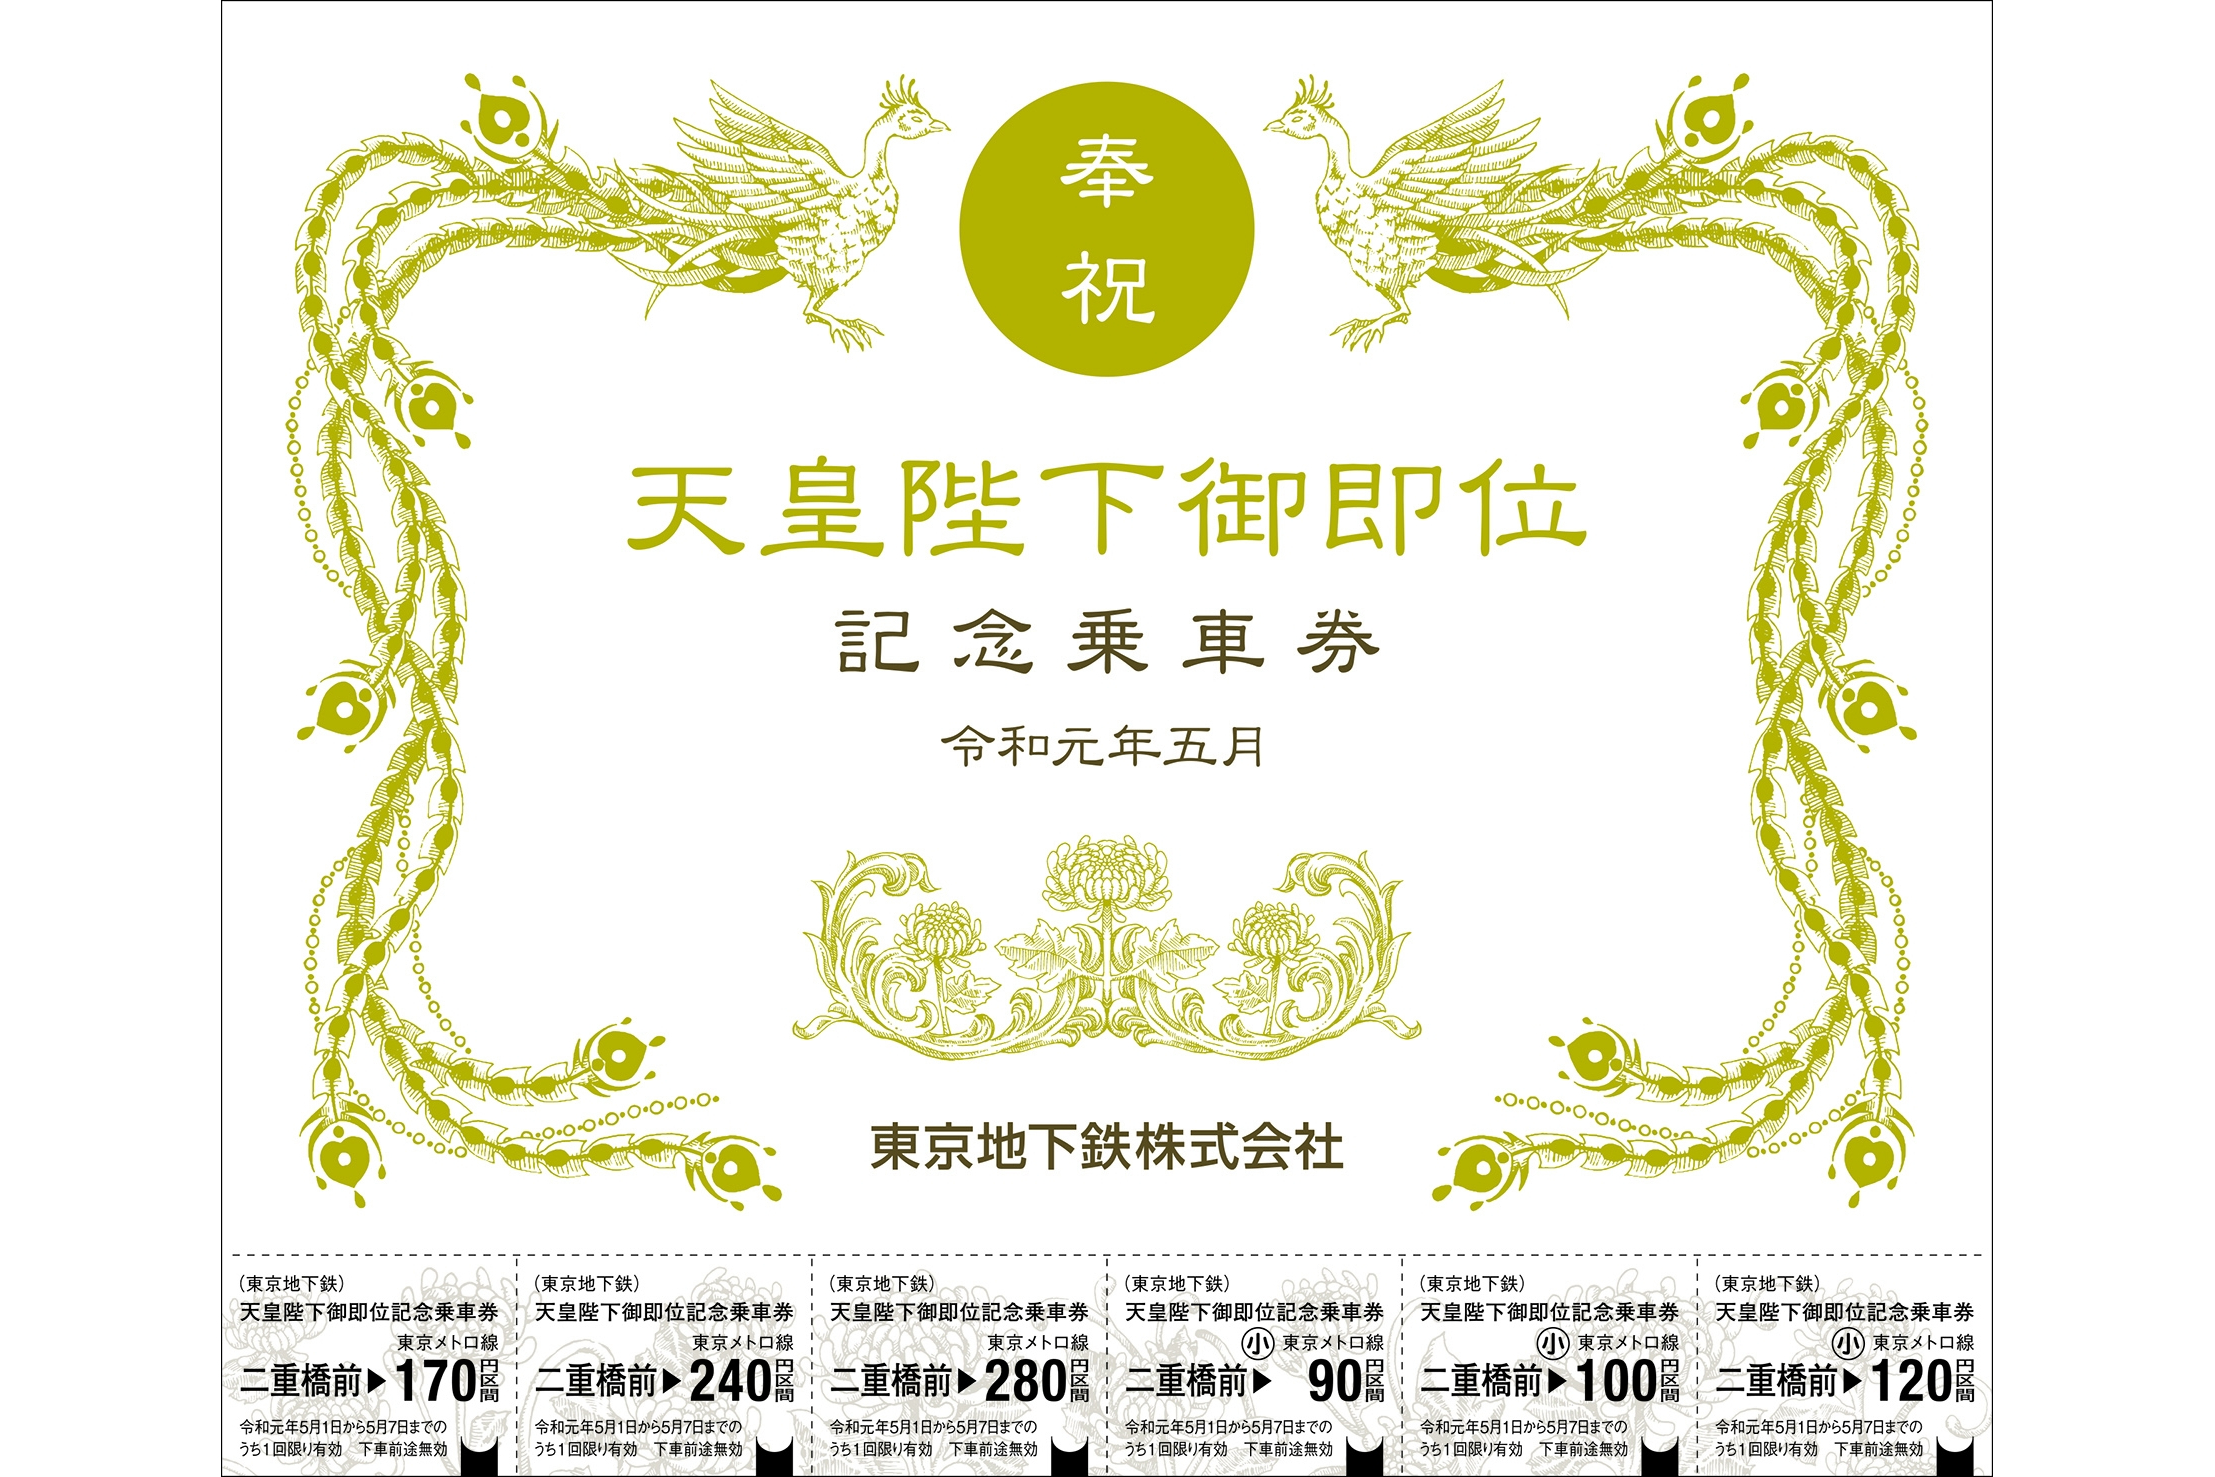 東京メトロ、「天皇陛下御即位記念乗車券」を令和元年5月1日発売 